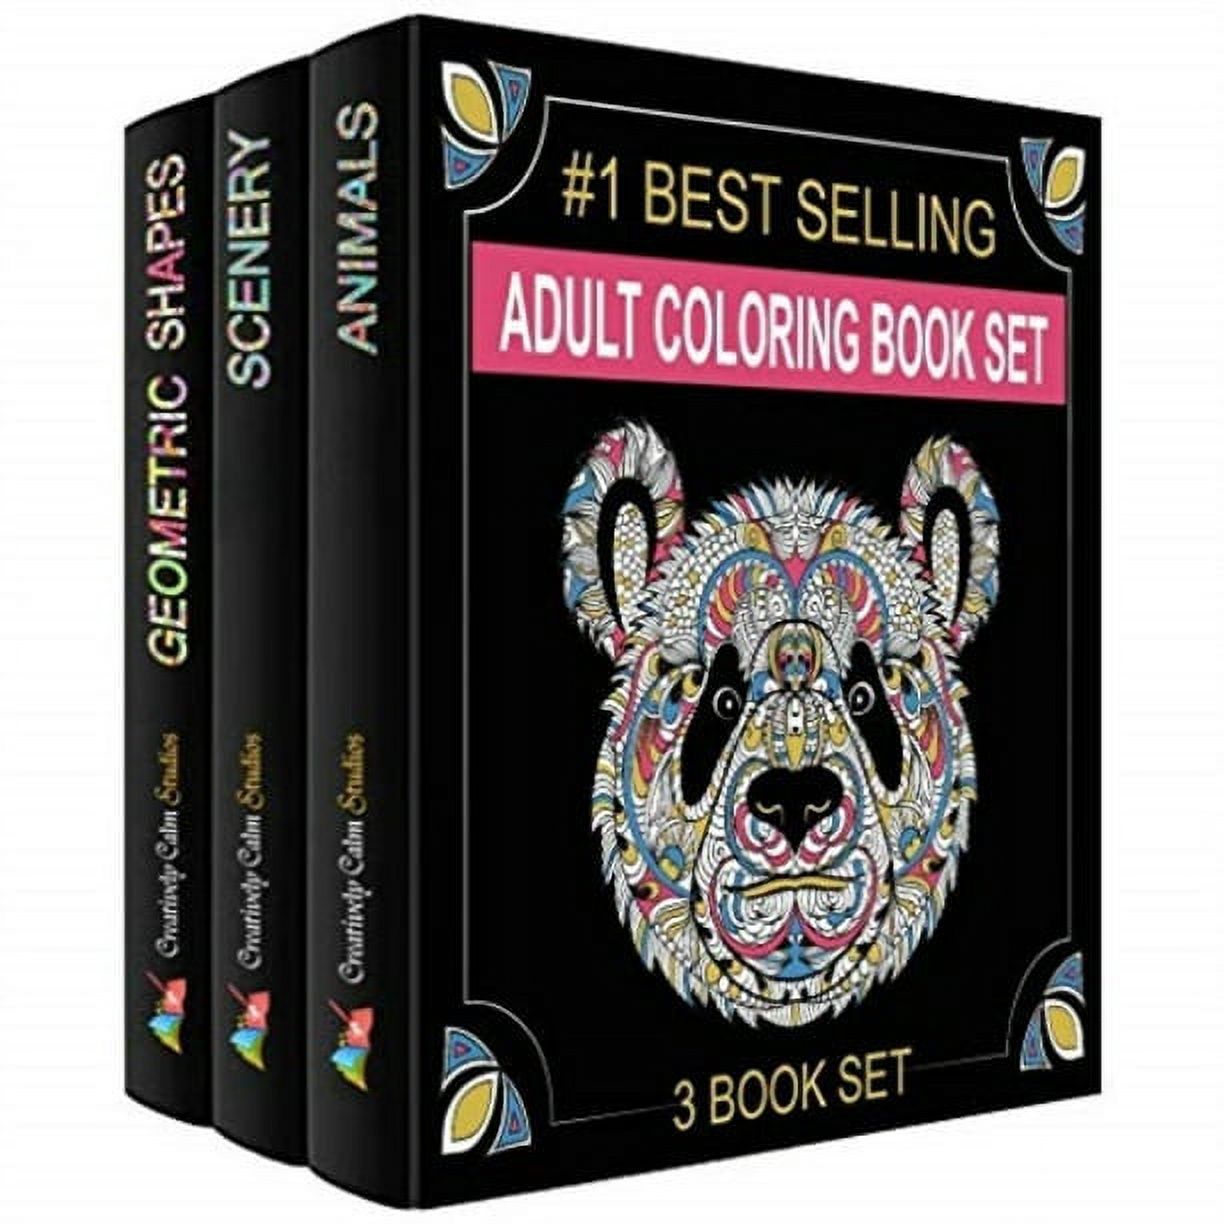 Adult Coloring Books Set - 3 Coloring Books For Grownups - 120 Unique Animals, Scenery & Mandalas Designs. Coloring books for adults relaxation. - image 1 of 5